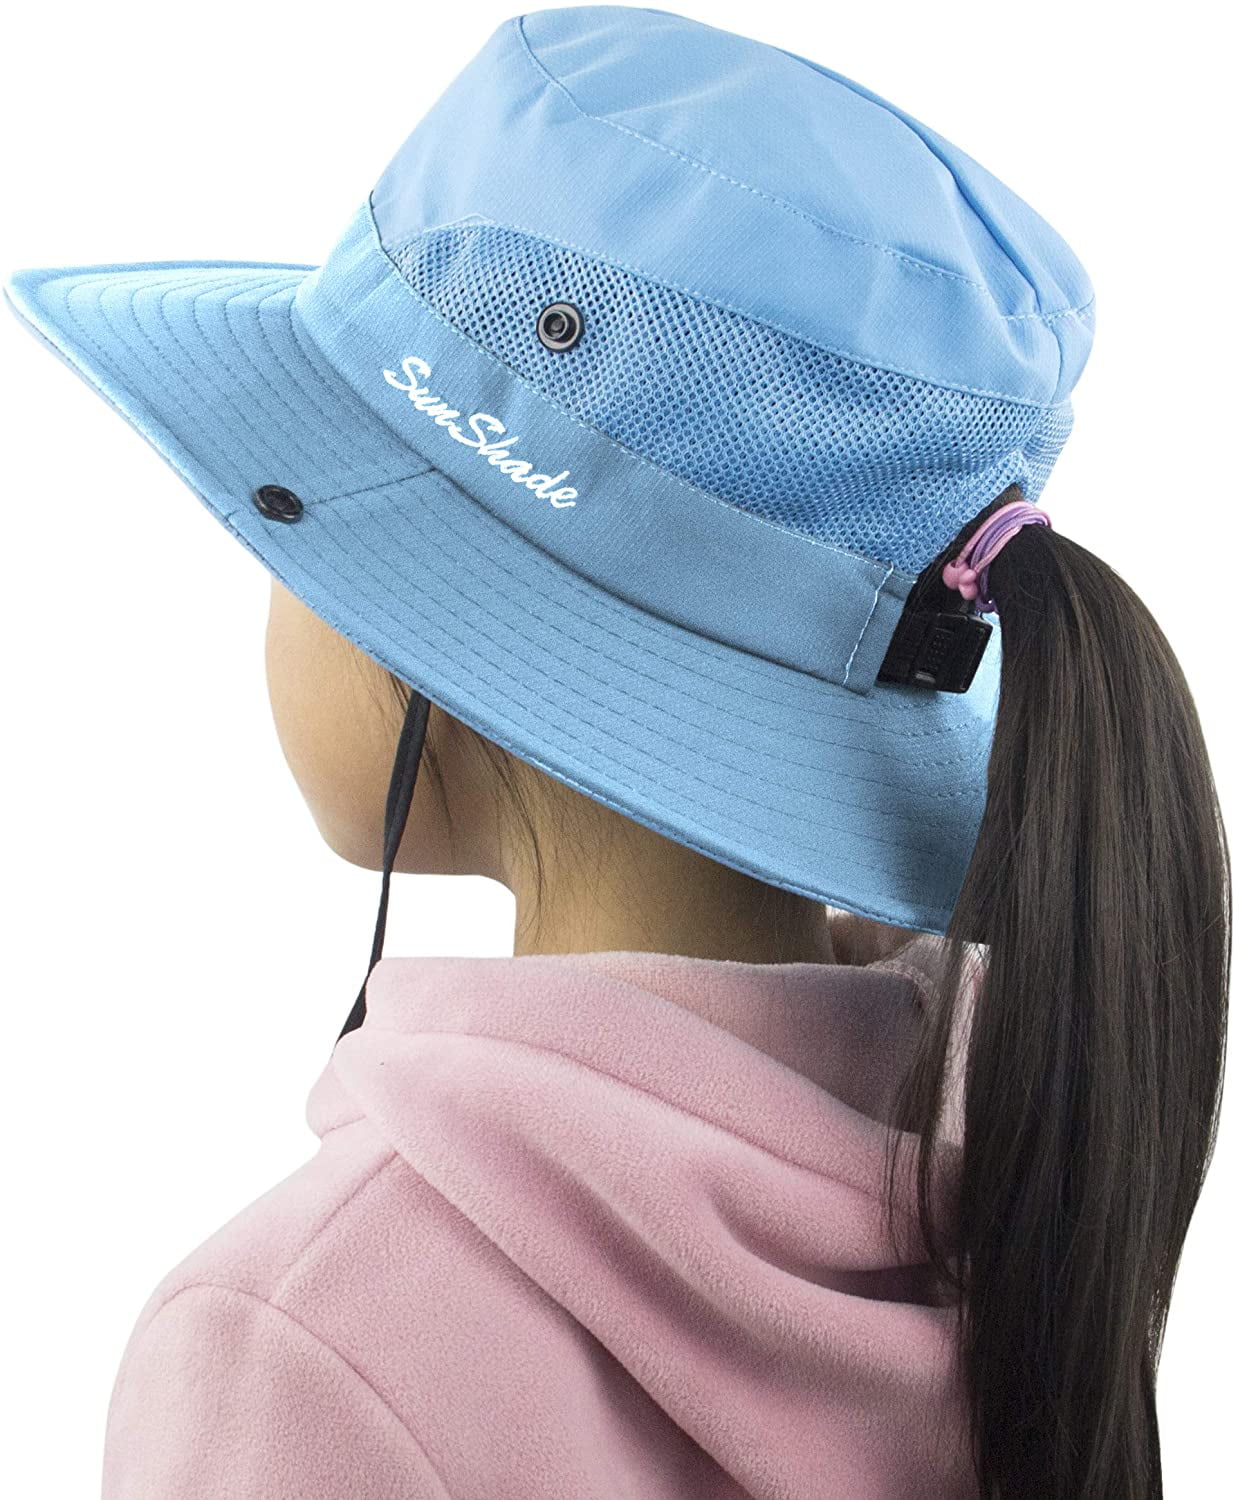 Muryobao Toddler Child Kids Girls Summer Sun Hat Wide Brim UV Protection  Hats Floppy Bucket Cap for Beach Fishing Gardening Pure Sky Blue